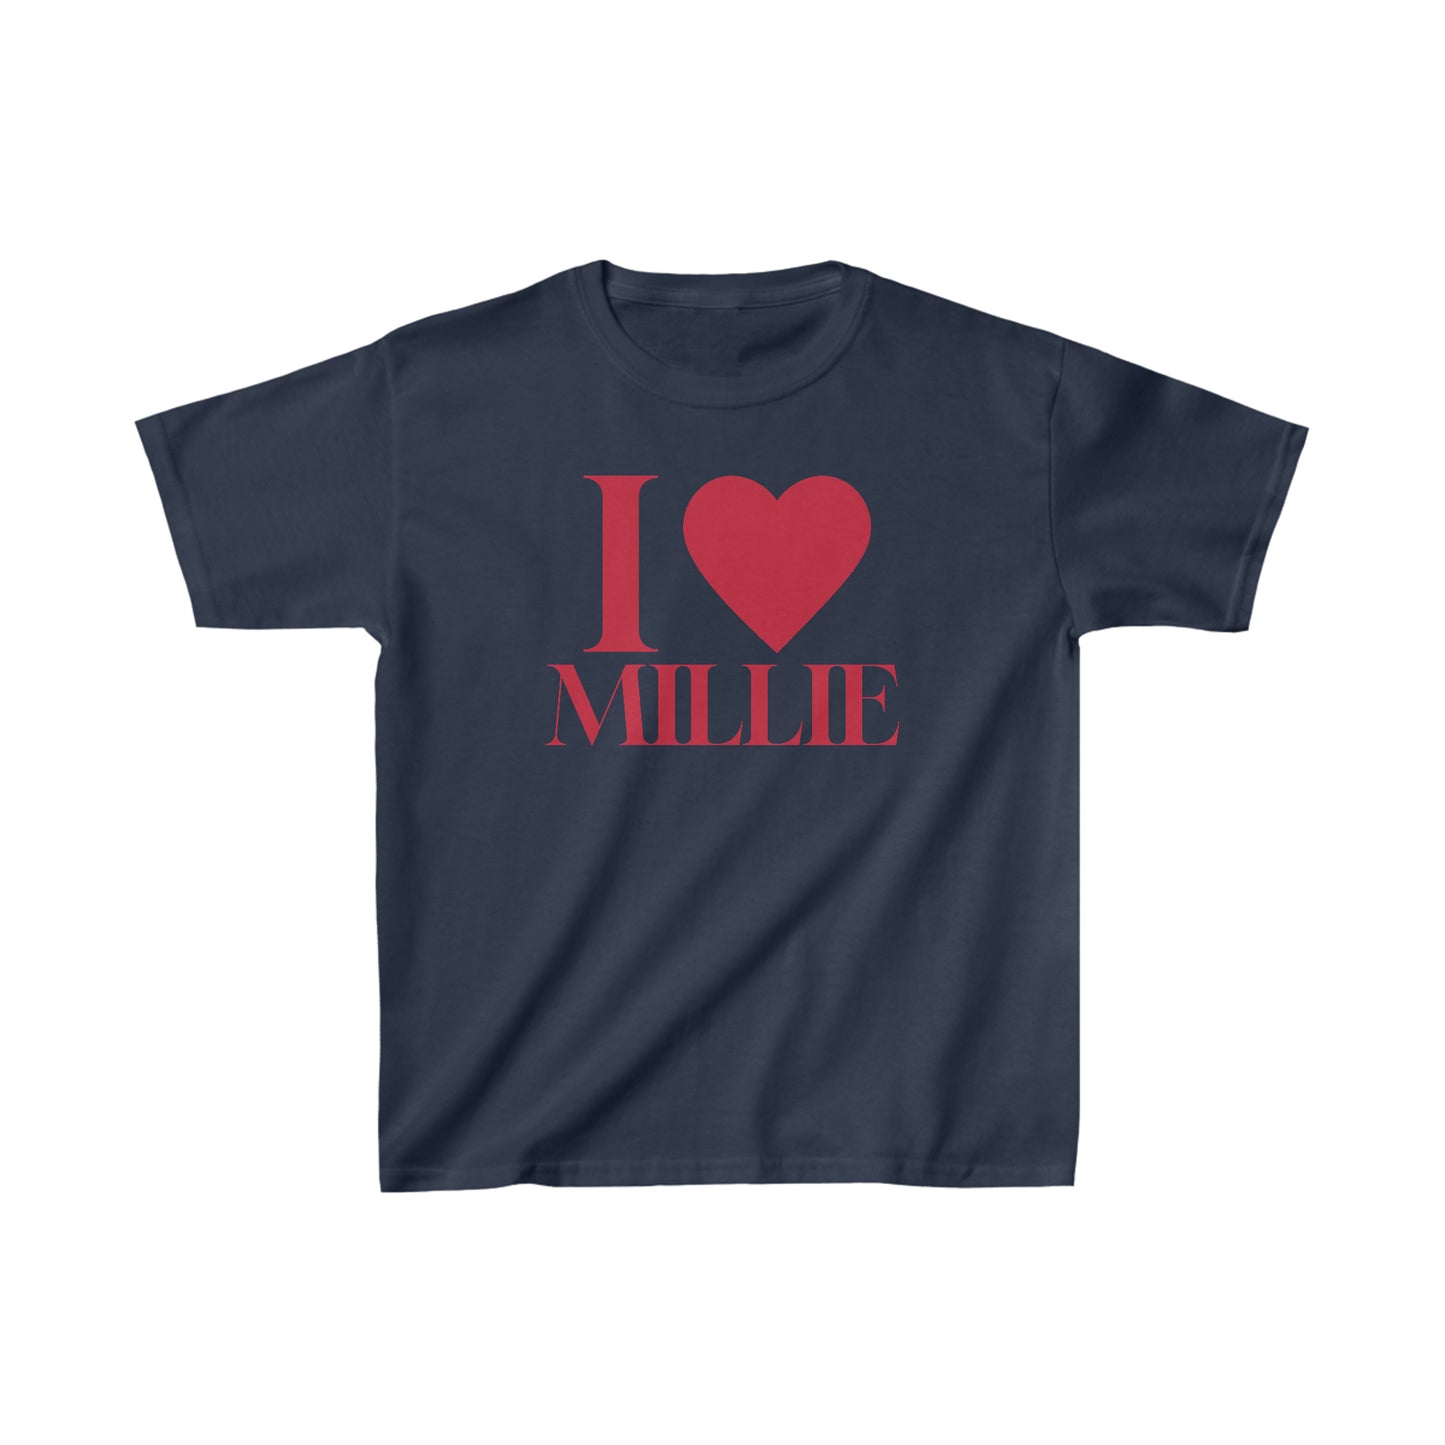 I Love Millie Tee  - Youth